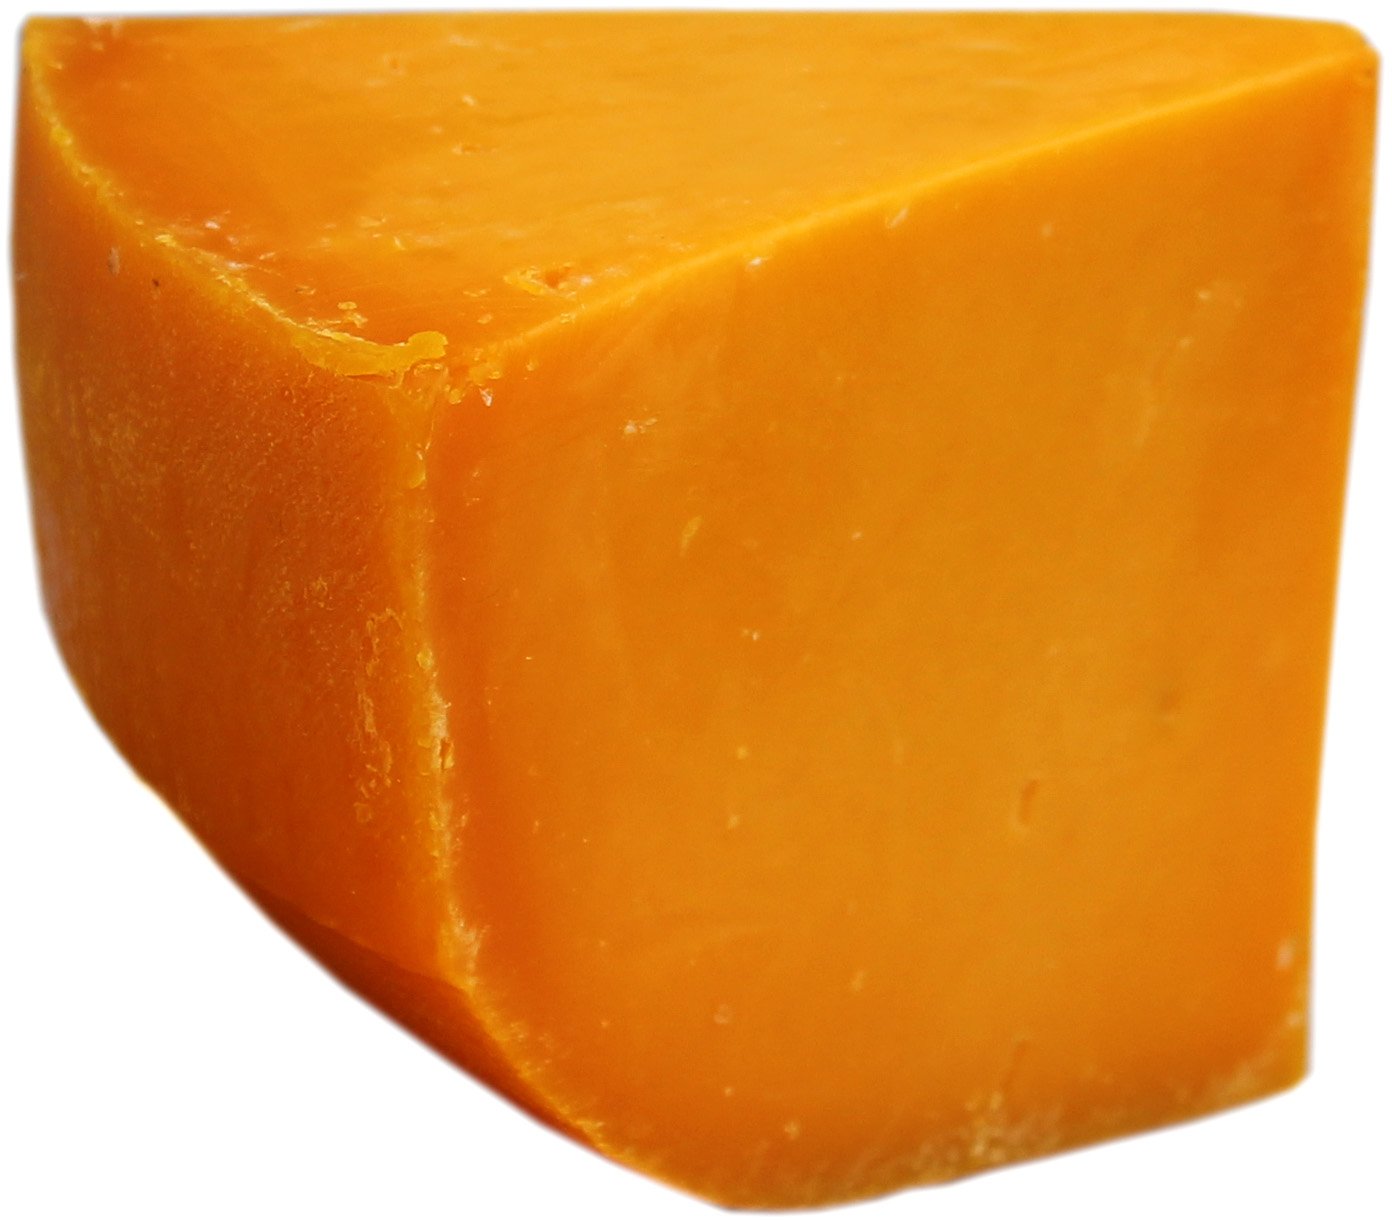 Isigny Ste Mere Mimolette Jeune Shop Cheese At H E B 